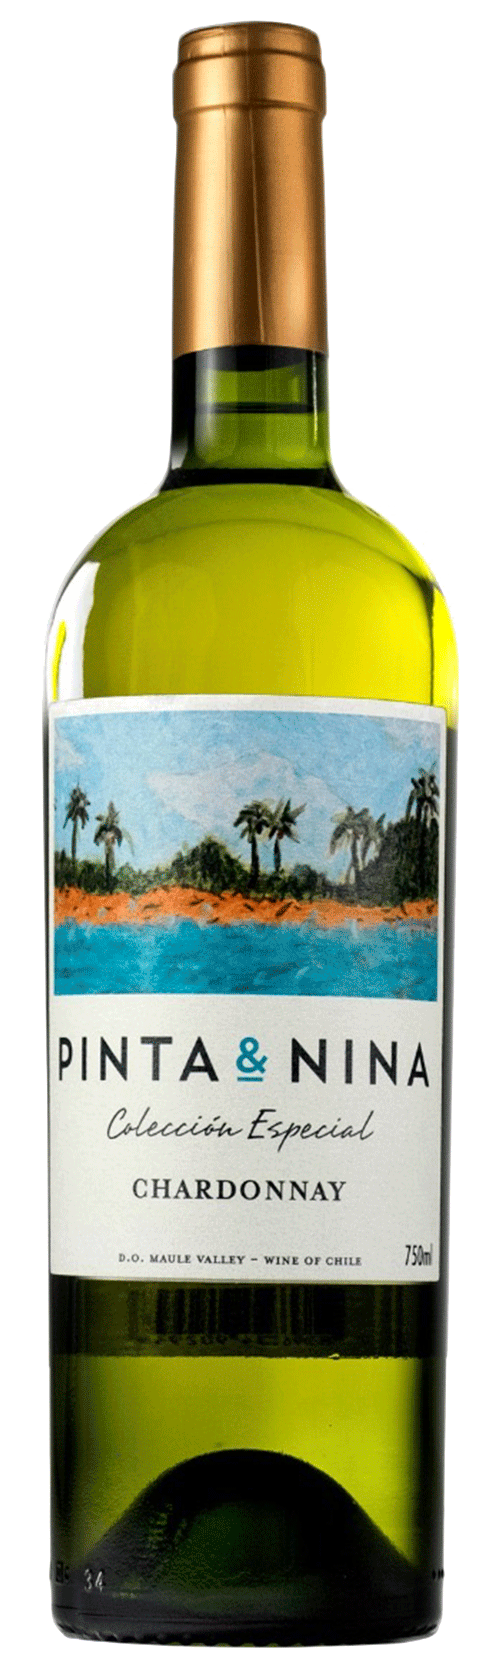 Pinta & Nina Colección Especial Chardonnay 2019